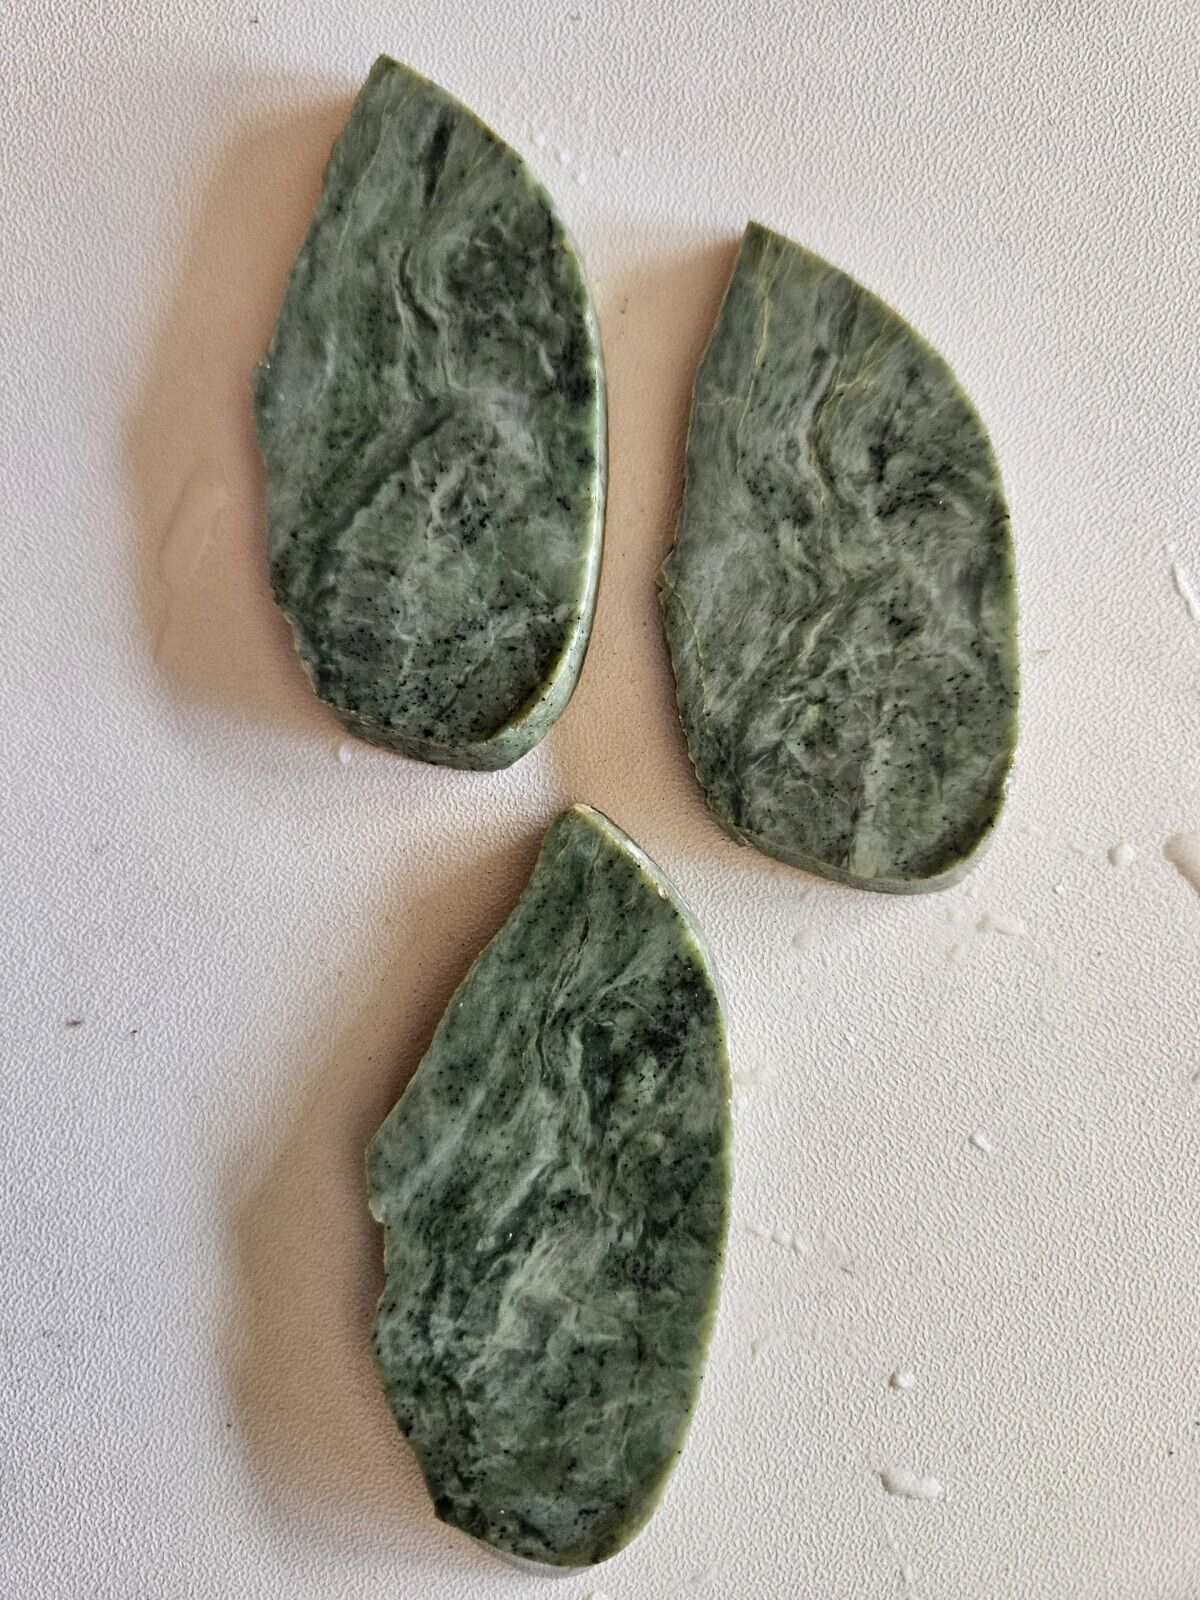 Three Nephrite Jade Slabs California 60 Grams